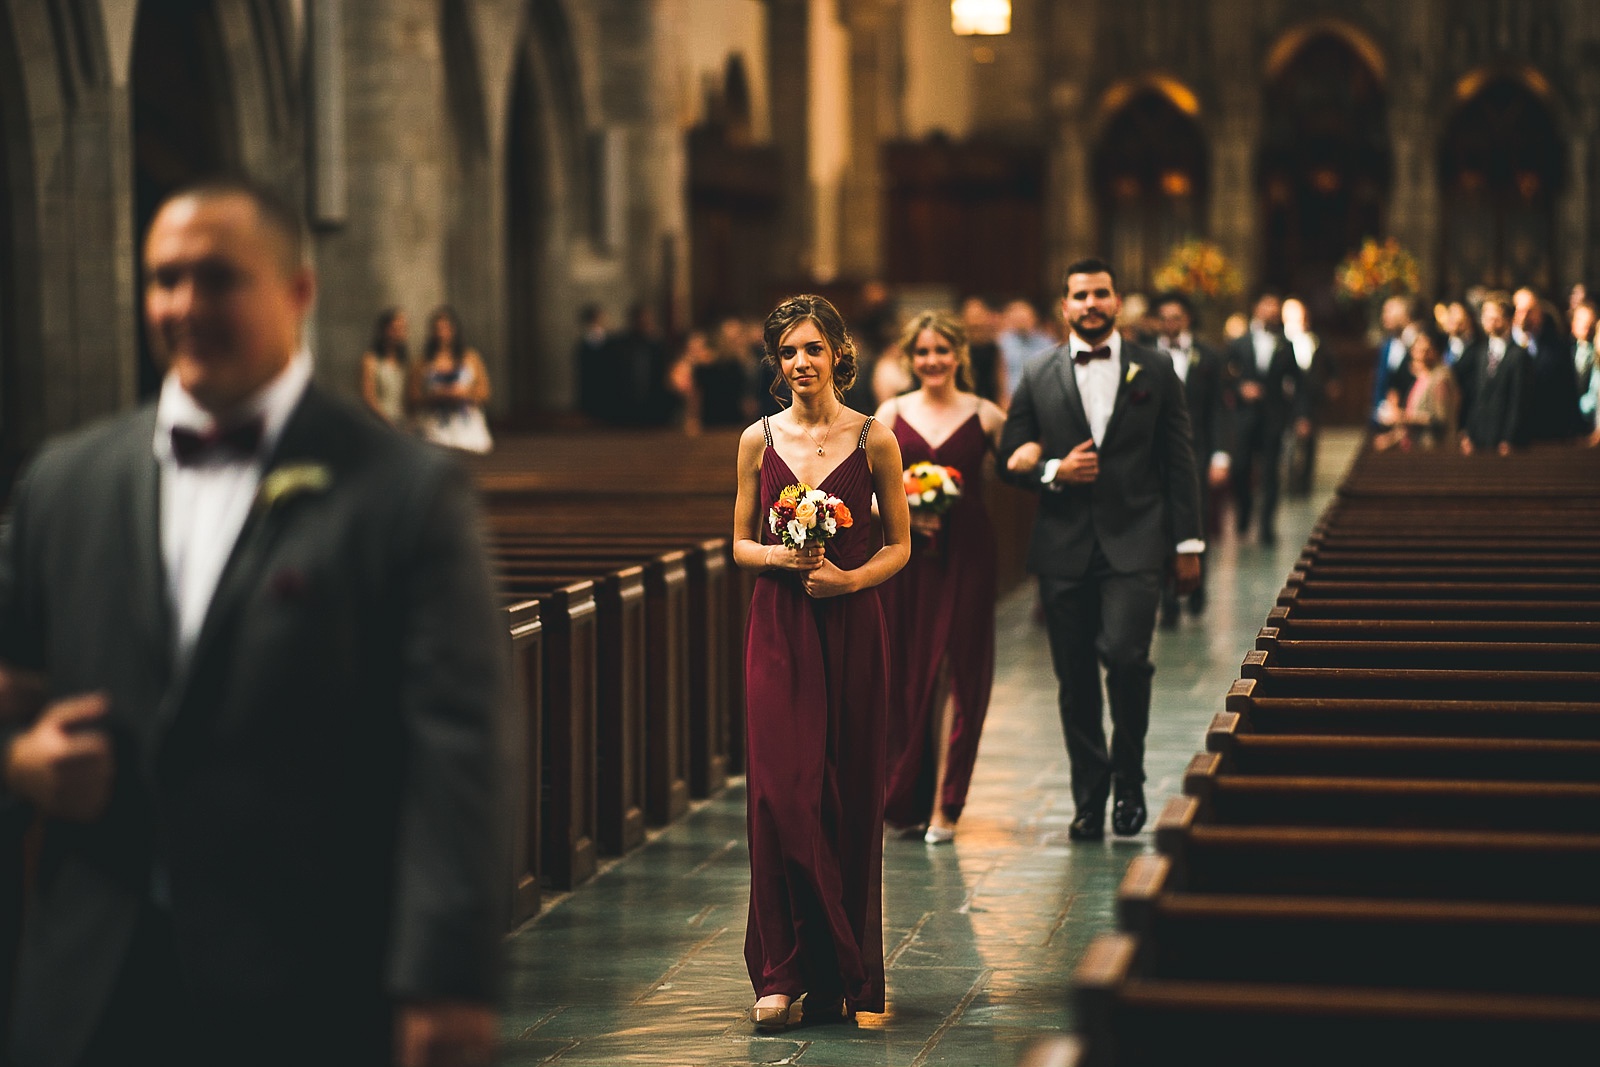 45 nikon 105 crazy bokeh - University of Chicago Wedding Photos // Annemarie + Zach